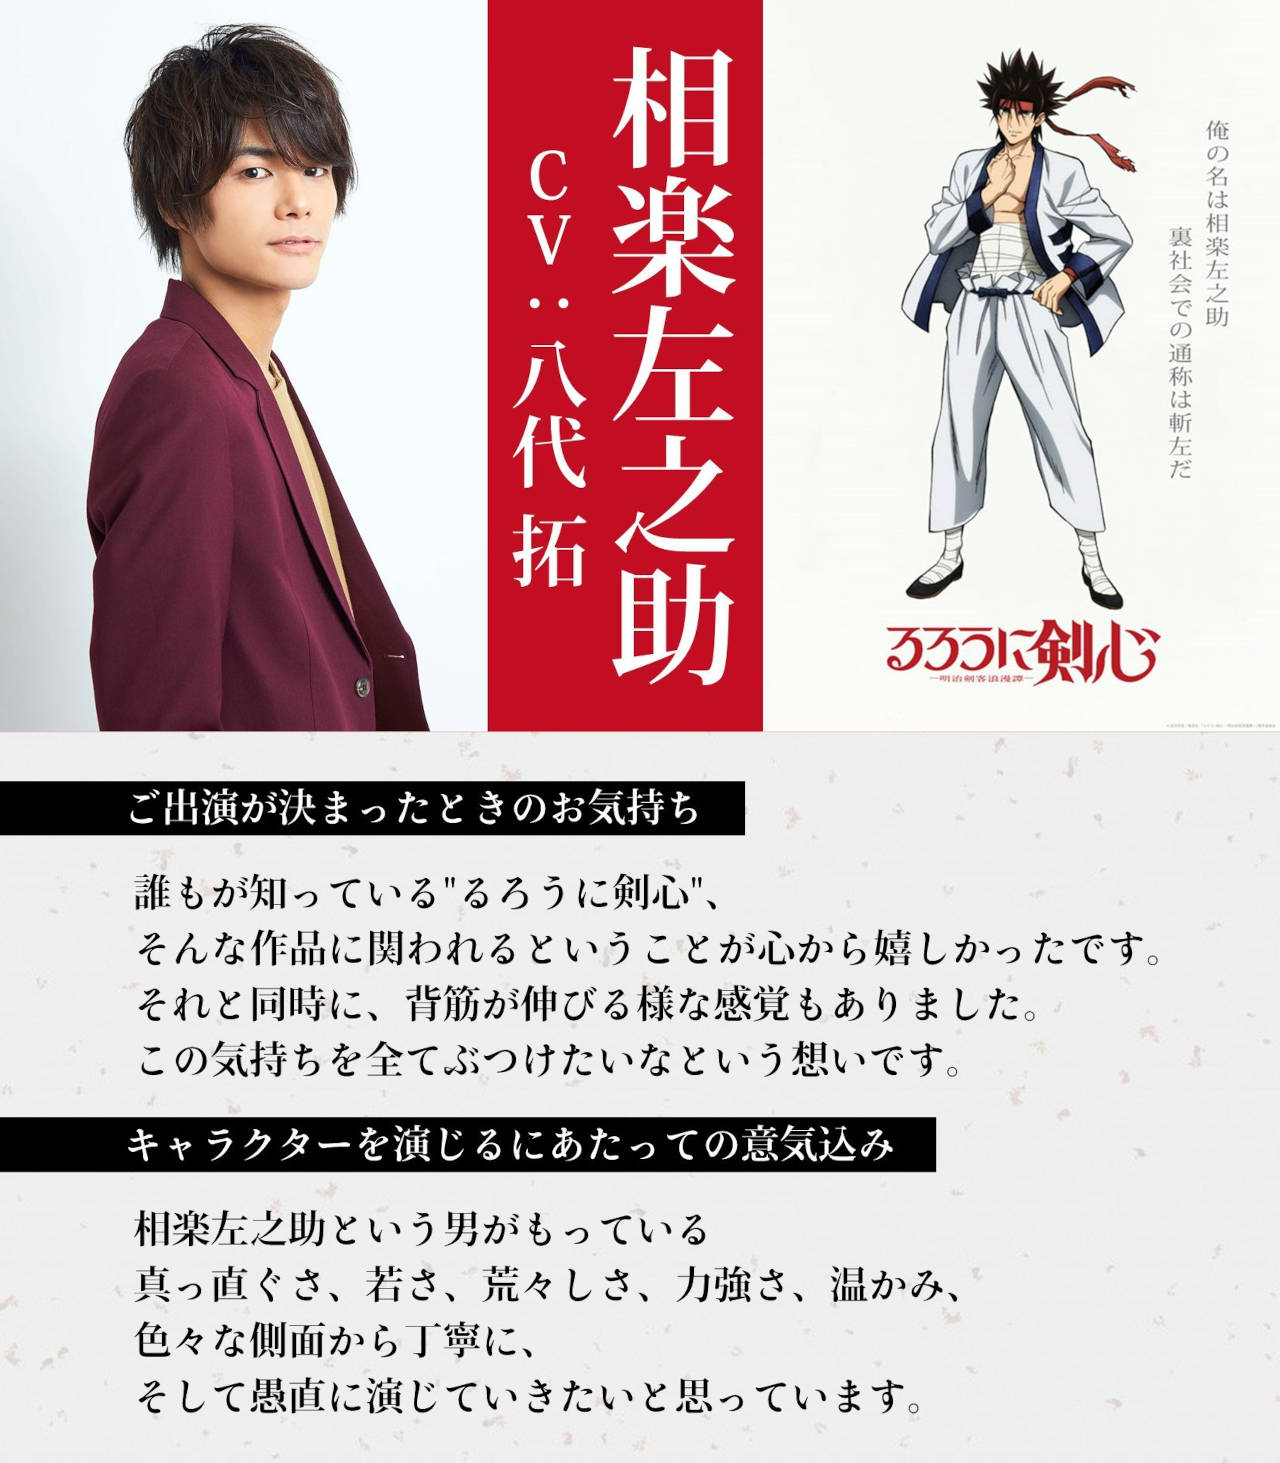 Nuevo anime de Rurouni Kenshin lanza segundo avance y muestra a Yahiko y Sanosuke